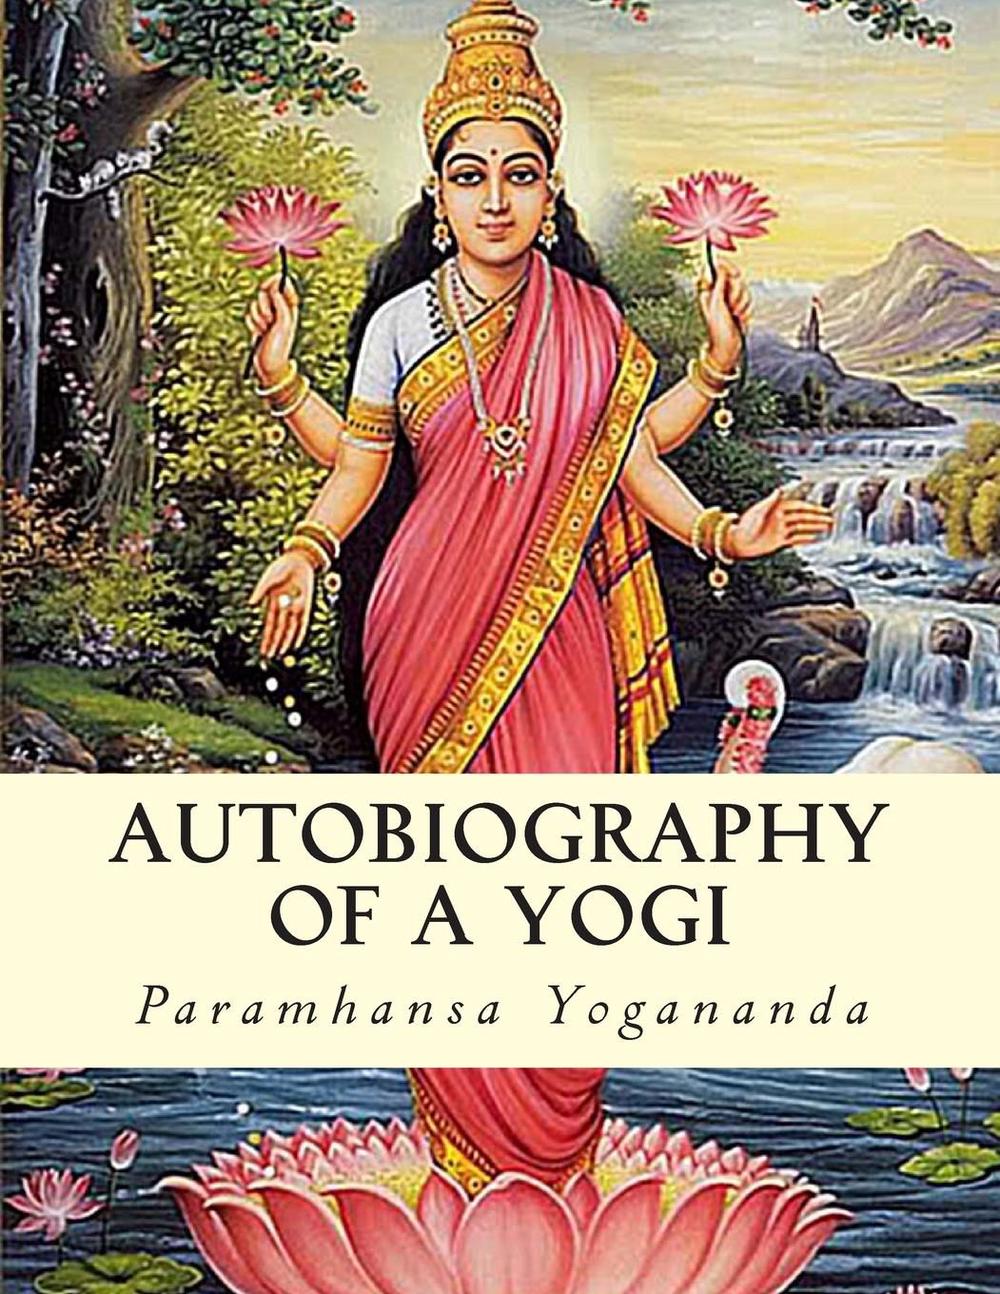 autobiography of a yogi ebook free download